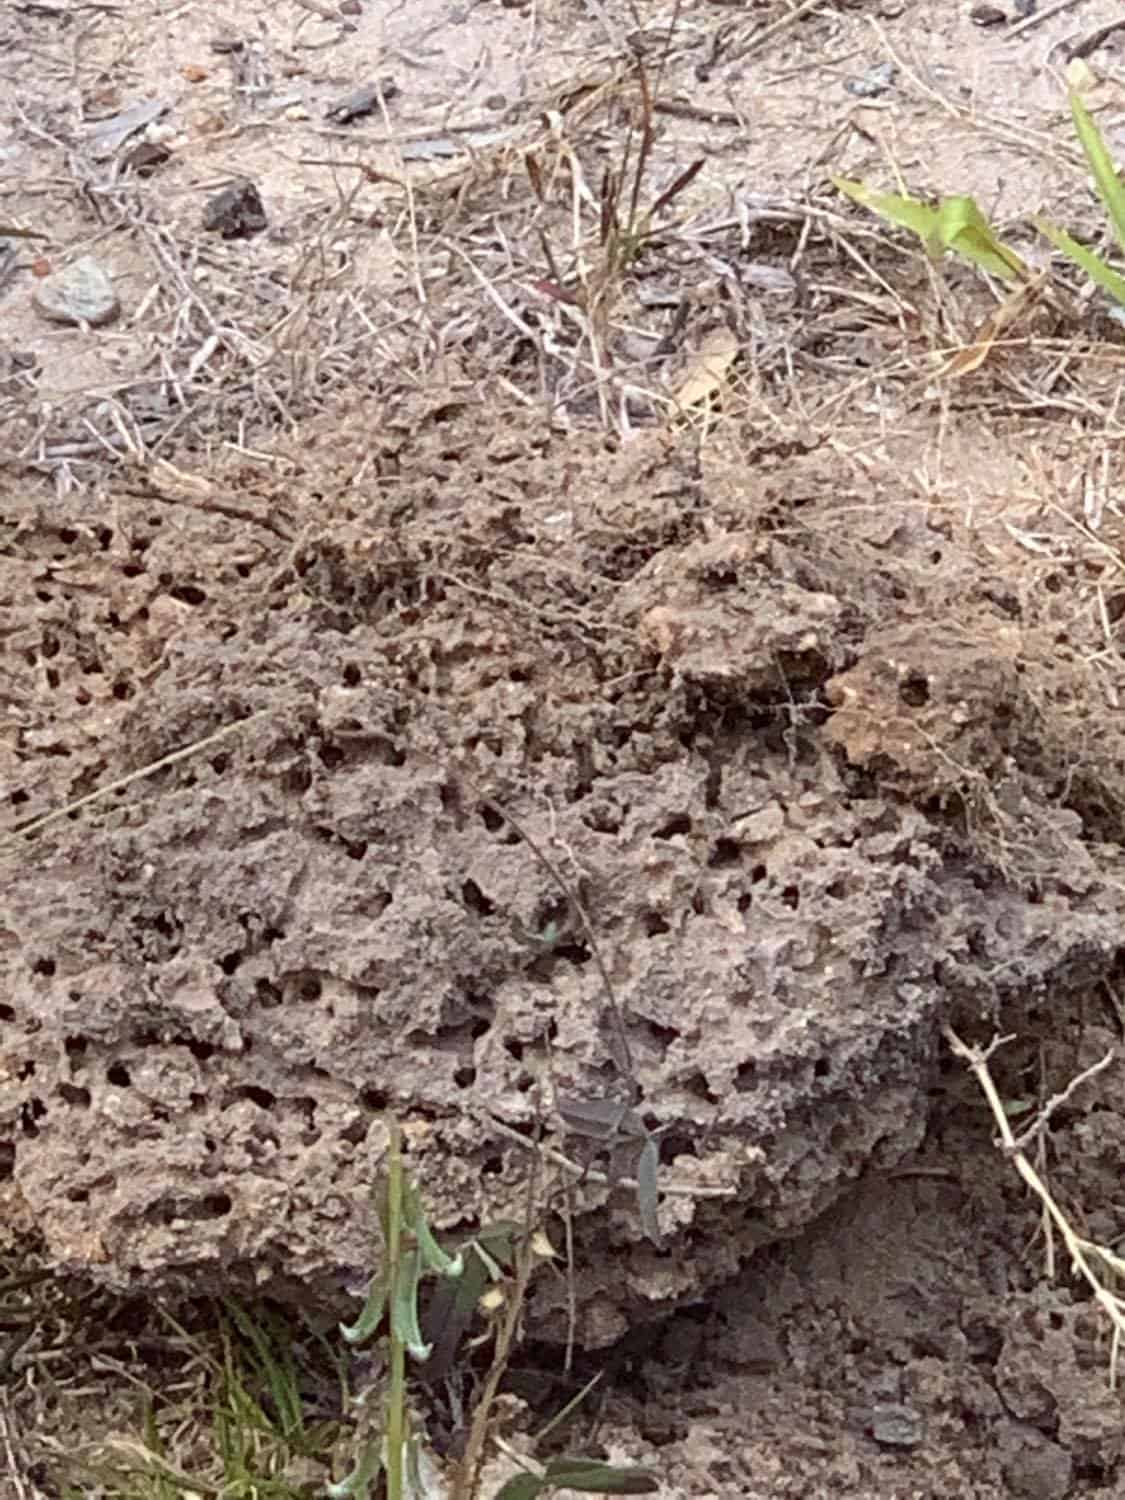 Fire ant nest treatment